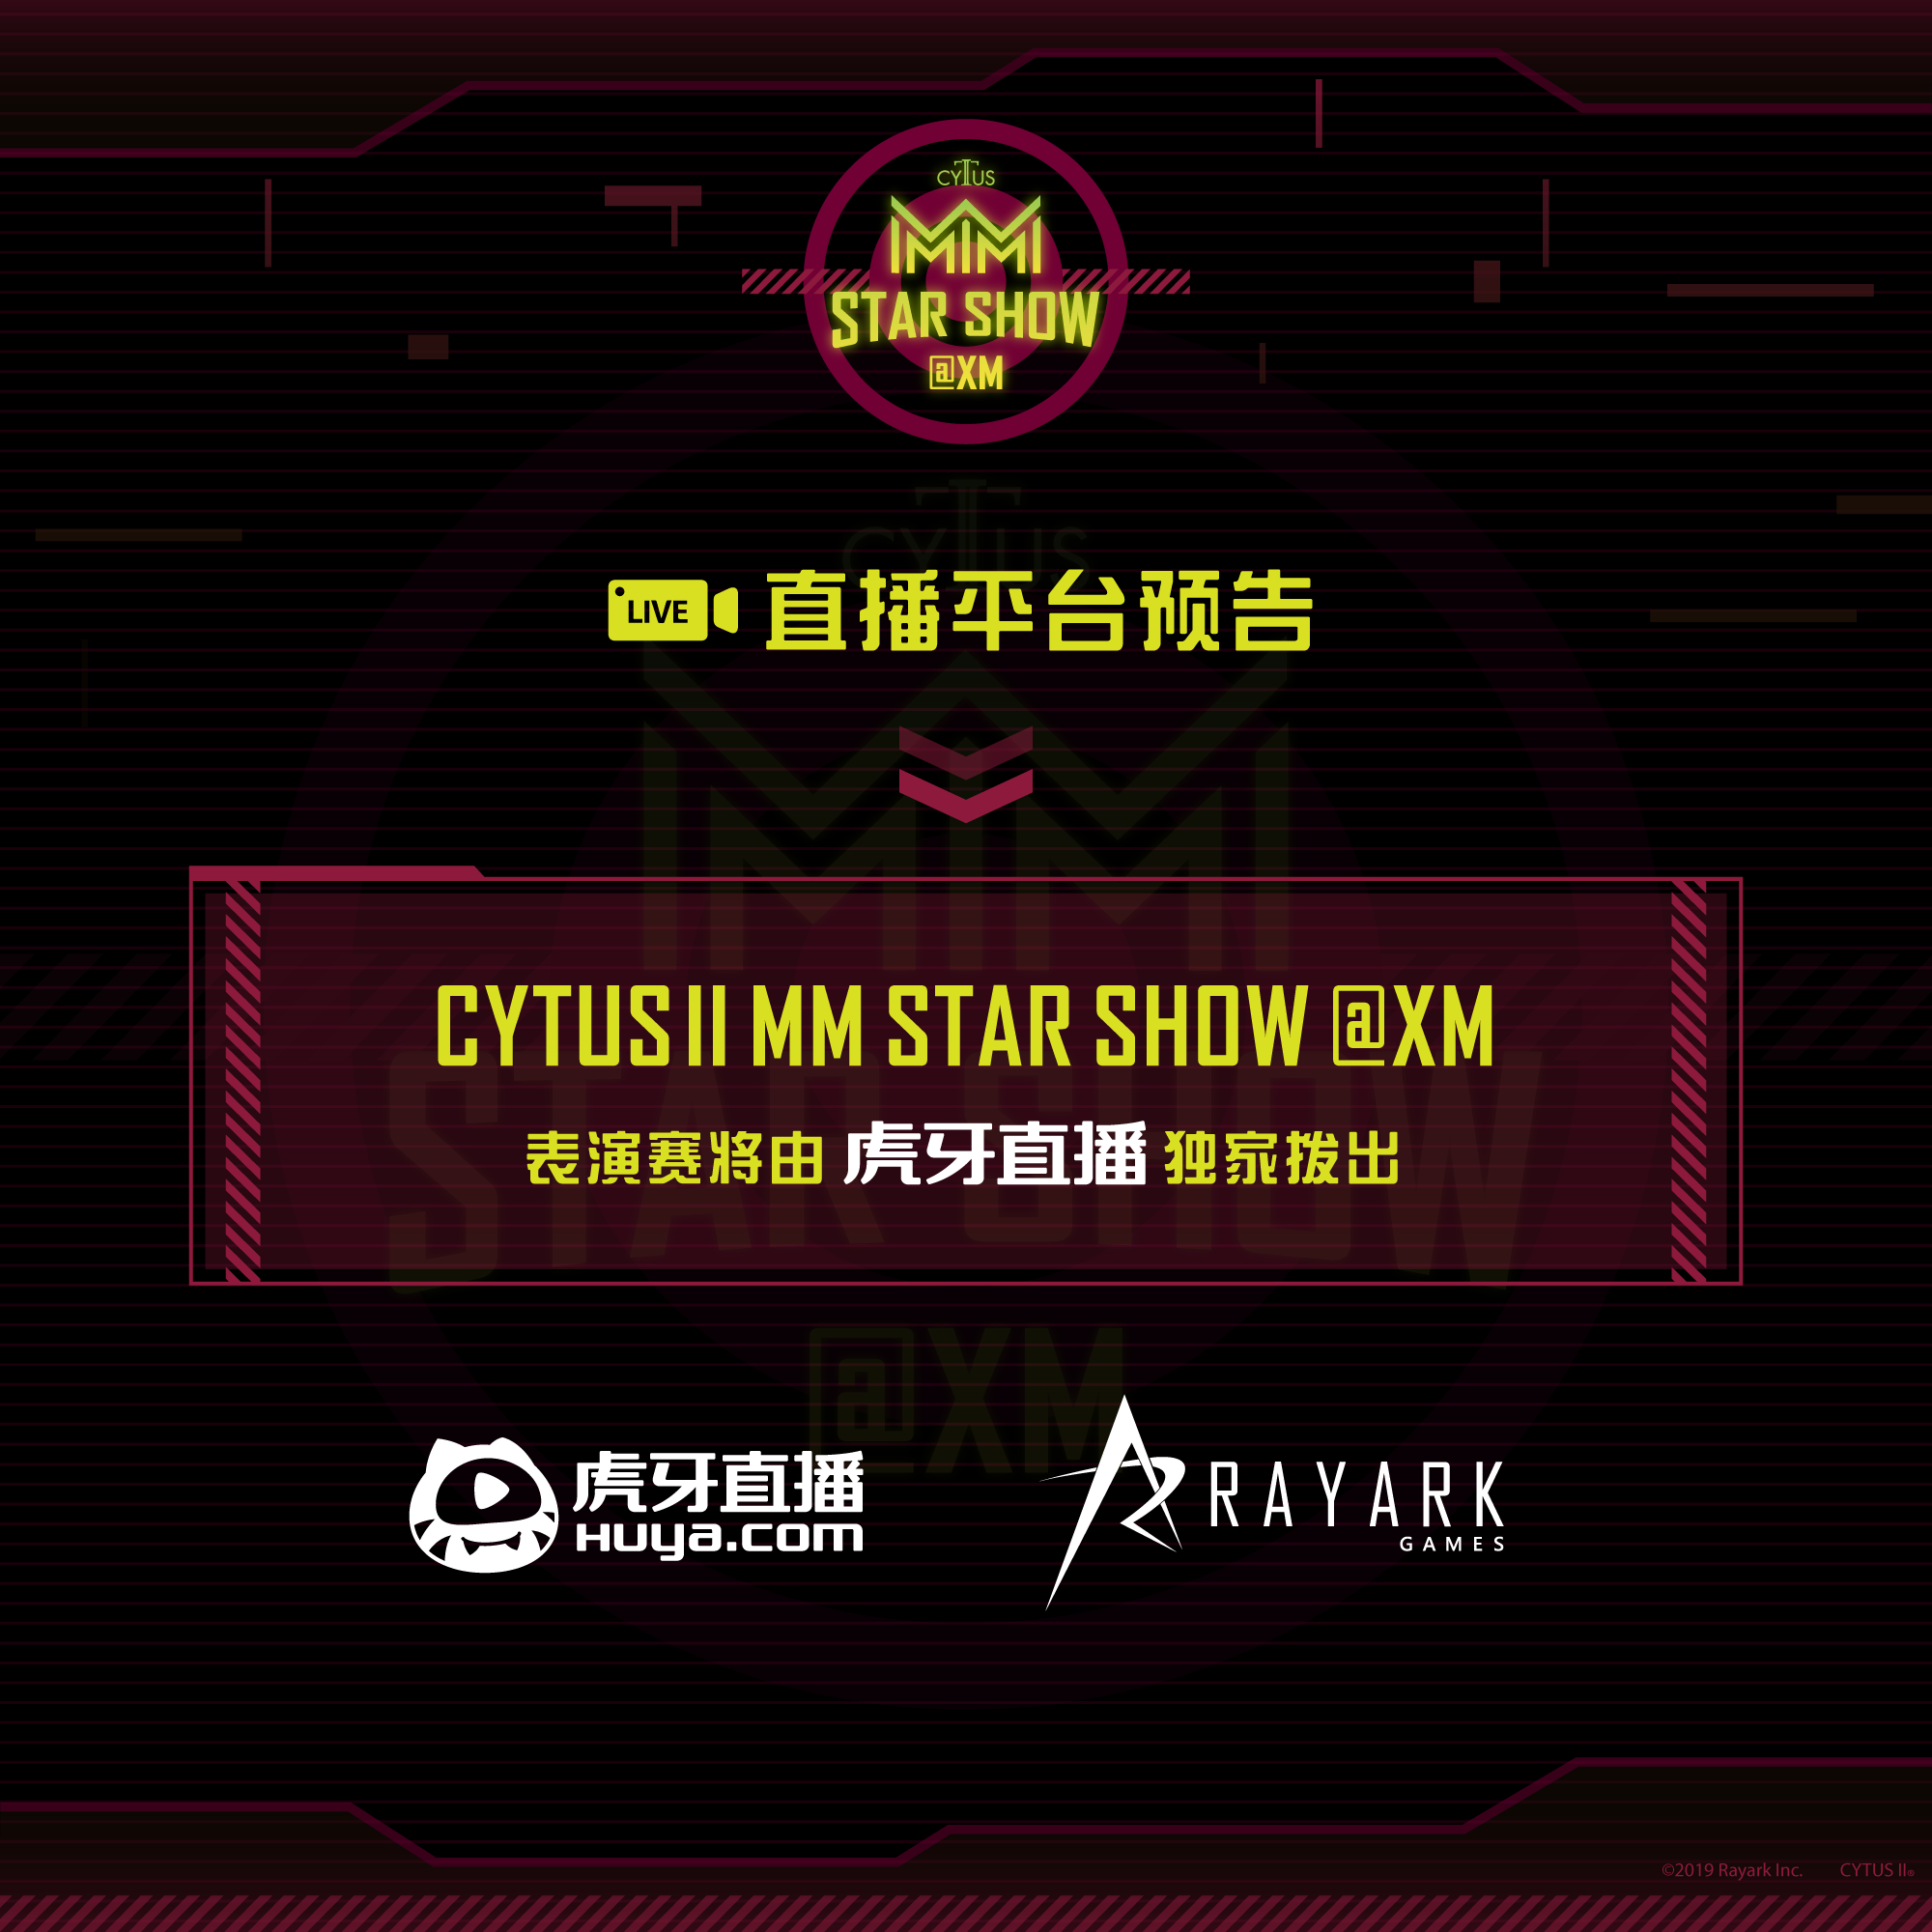 Cytus II MM Star Show @XM厦门表演赛即将开幕